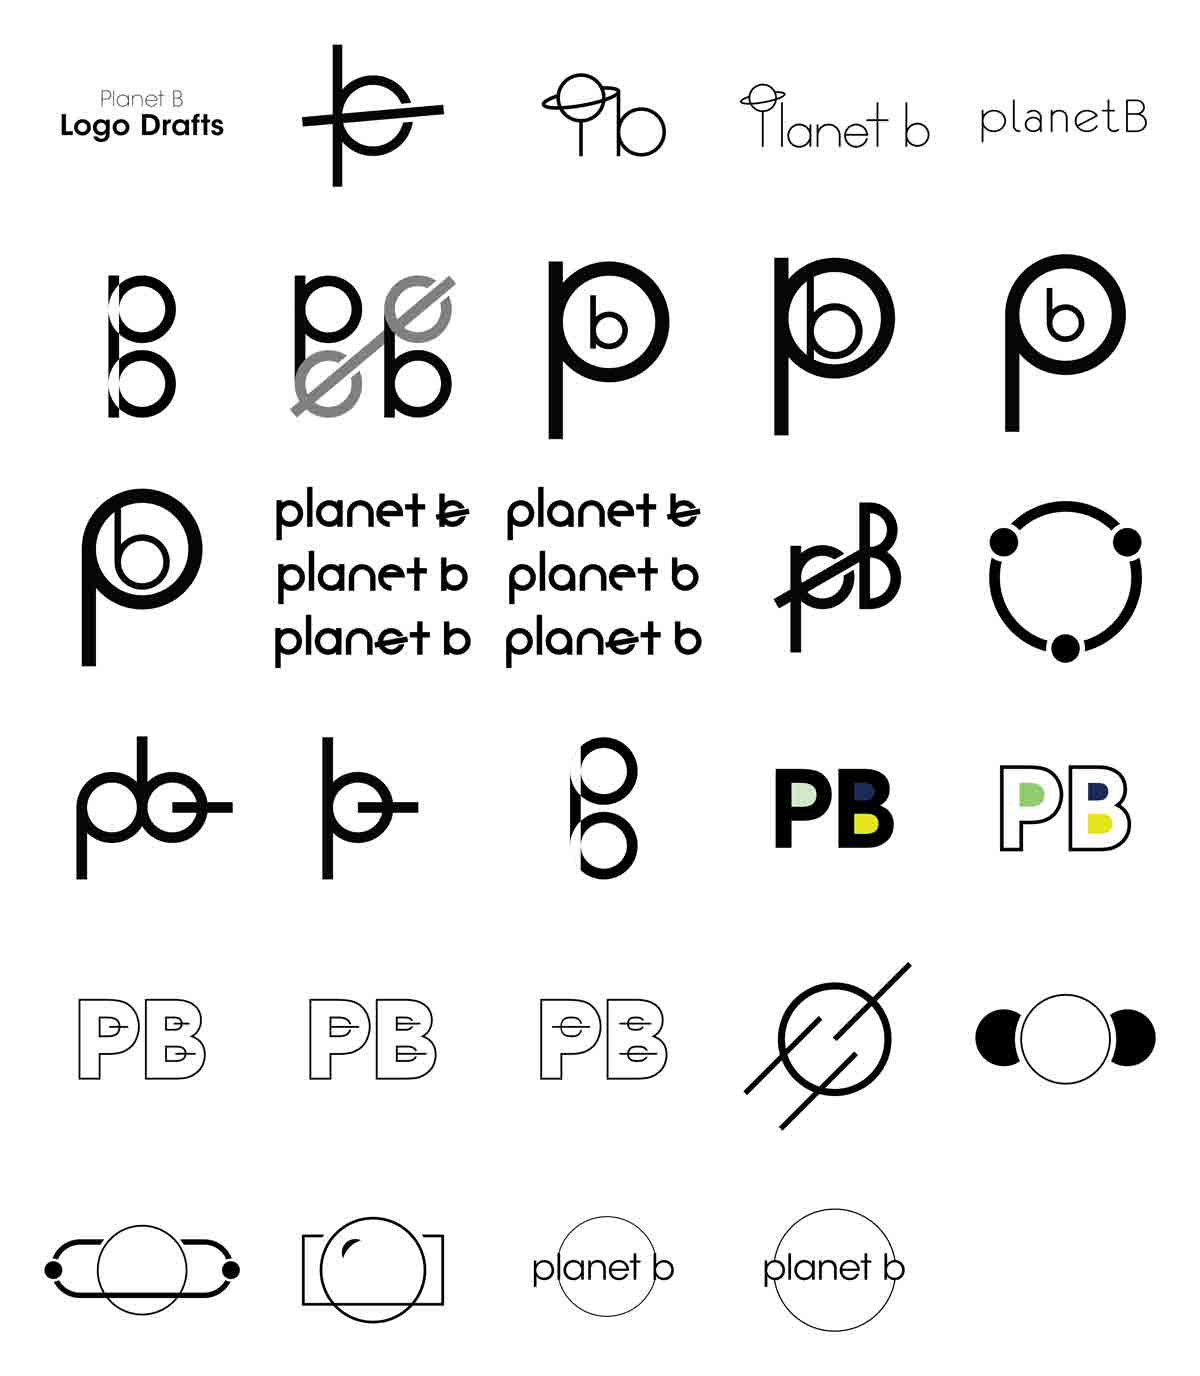 Planet B Logo Drafts